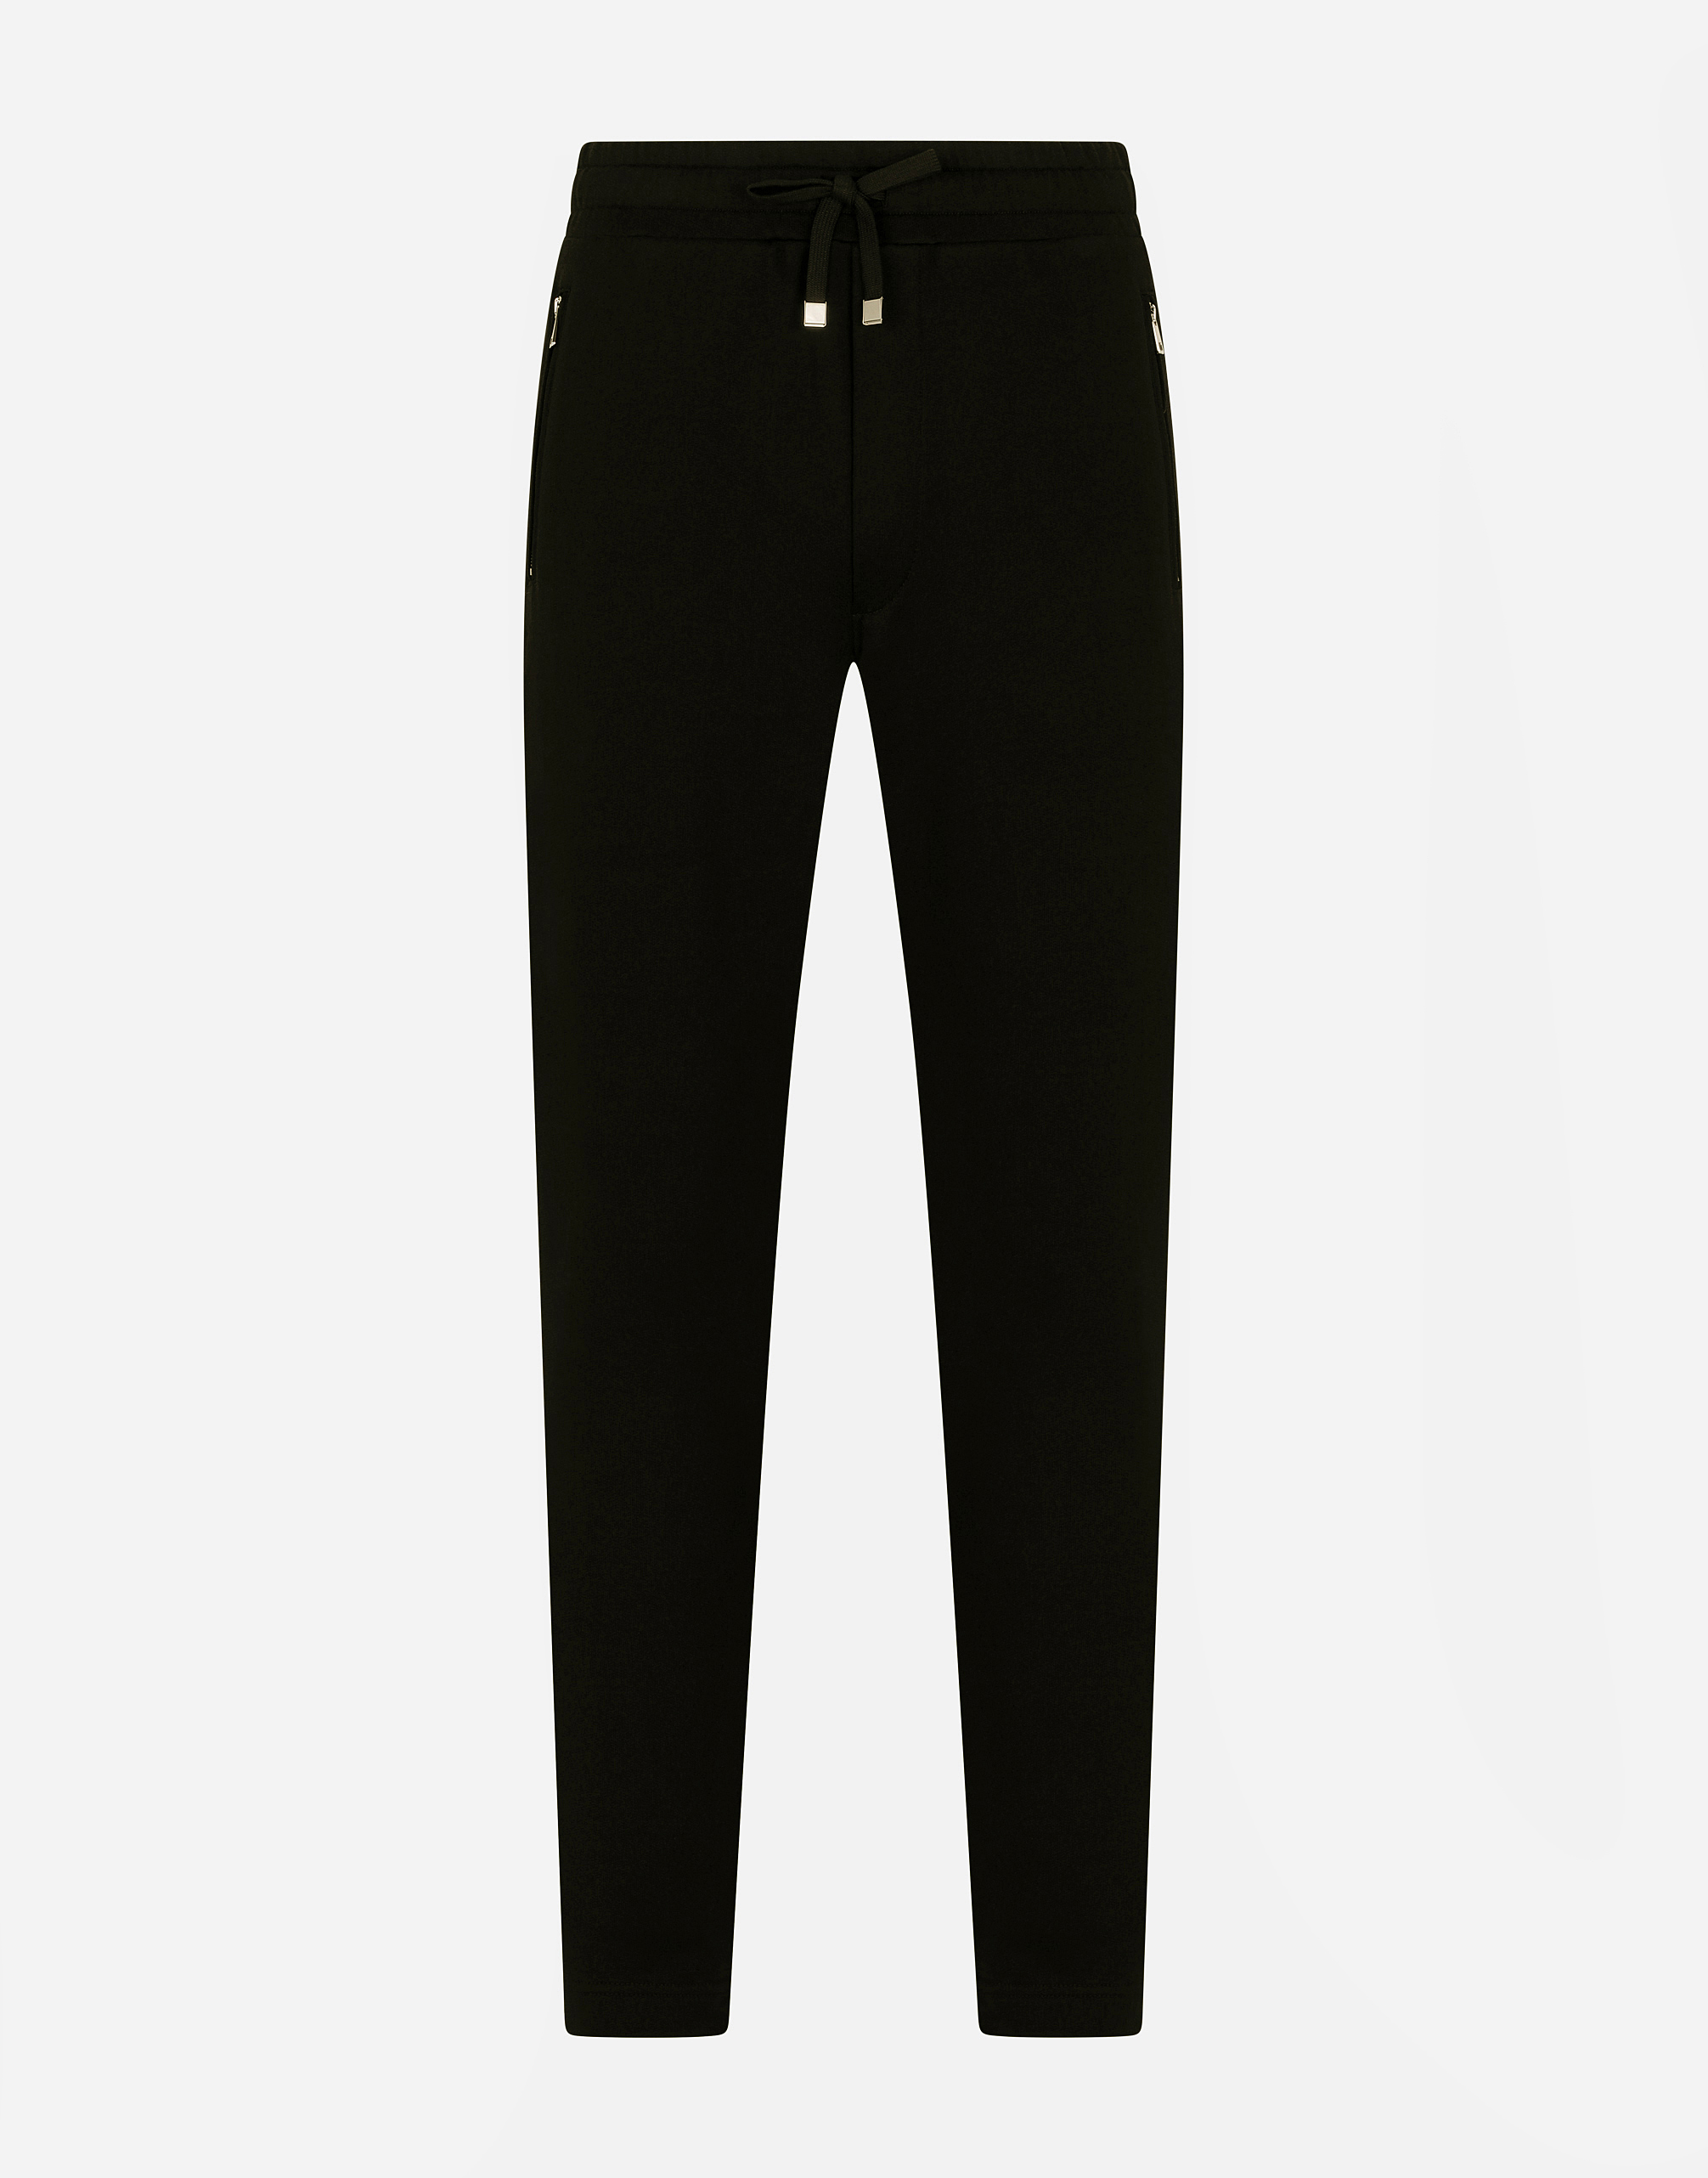 Cotton jogging pants in Black